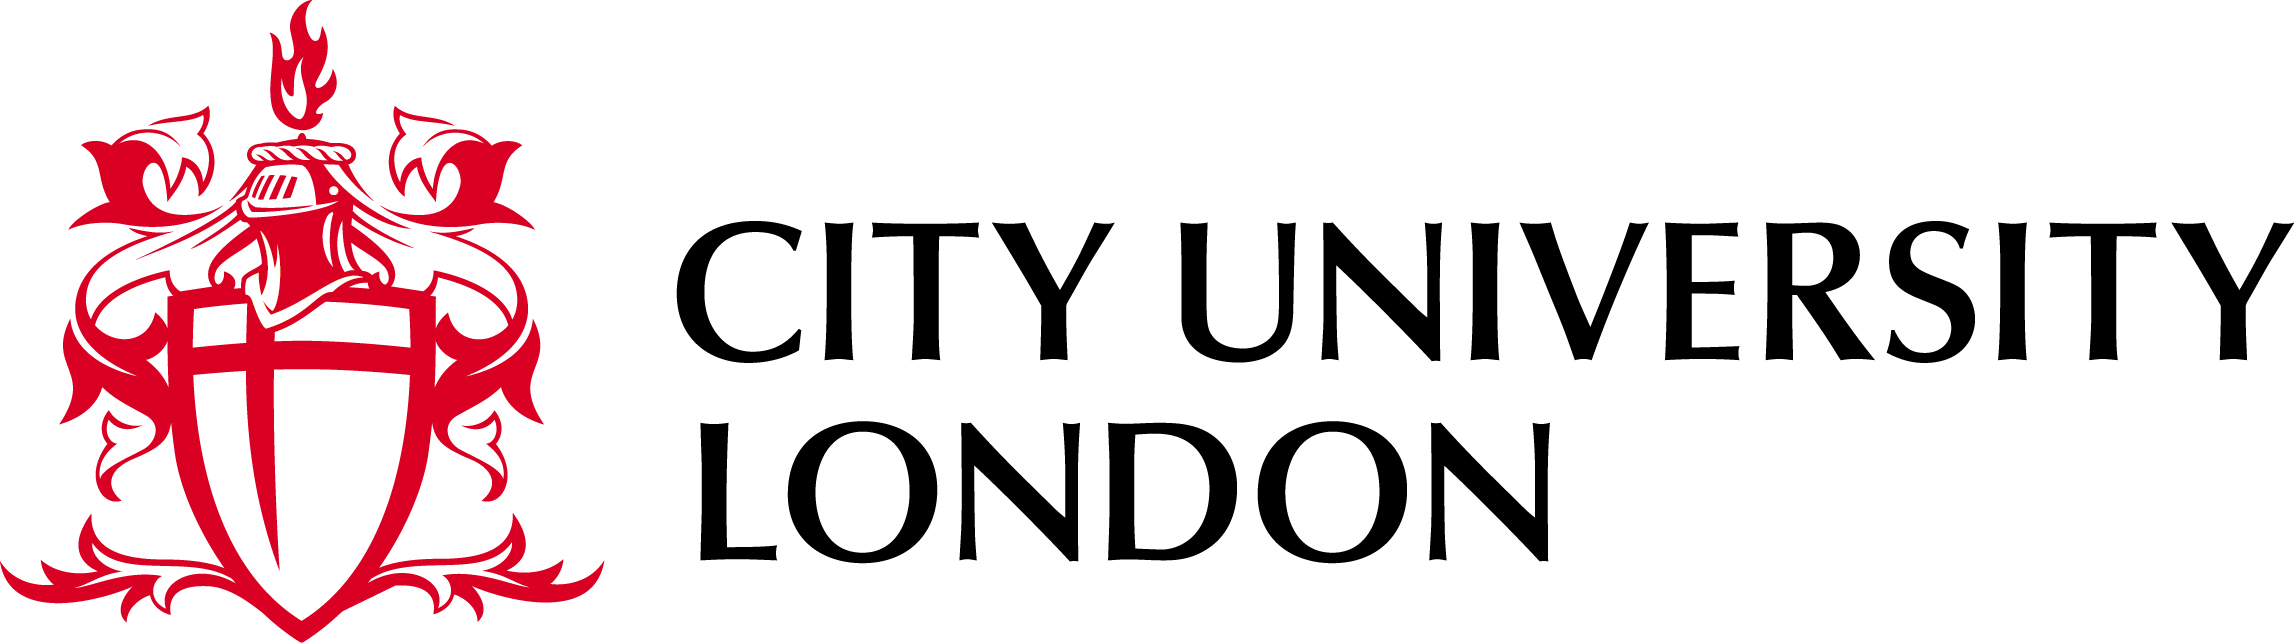 PAGE-5-City-University-Logo1.jpg